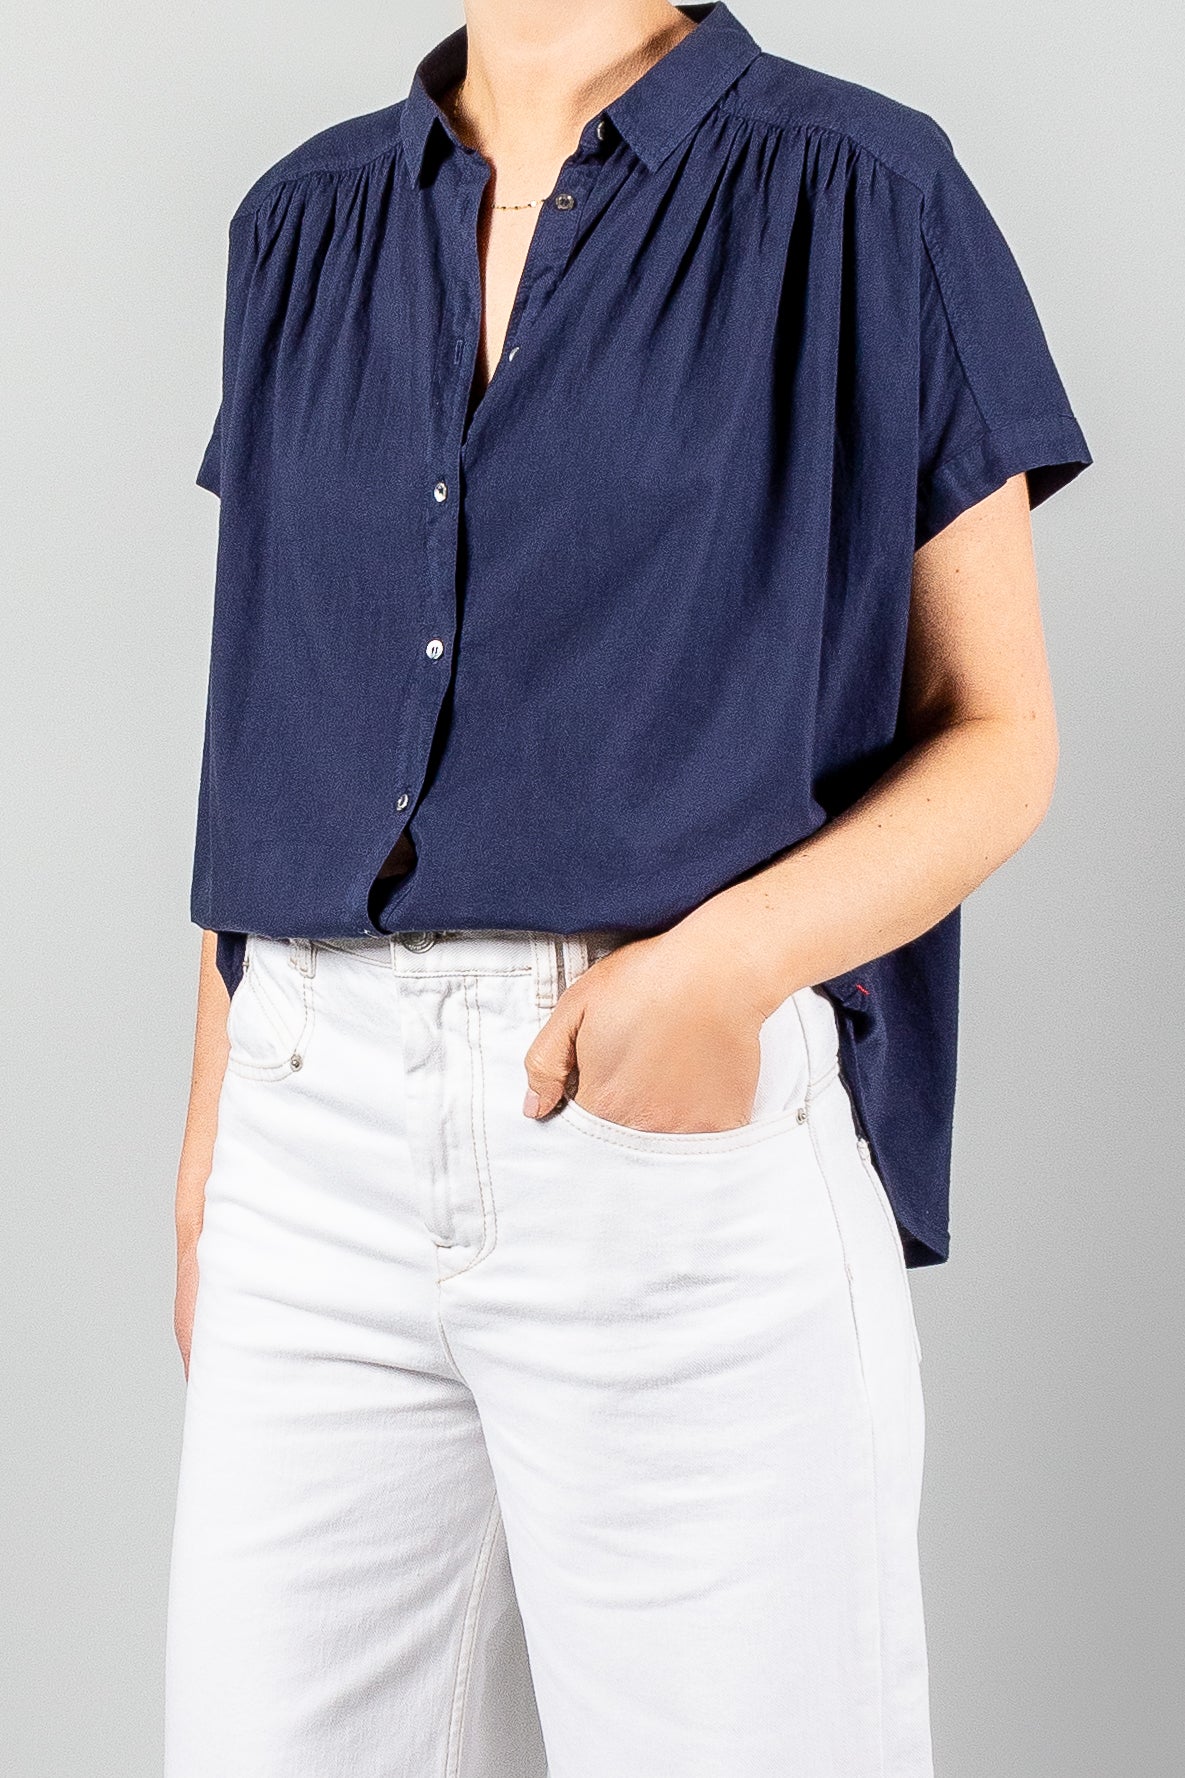 Xirena Pax Shirt-Tops-Misch-Boutique-Vancouver-Canada-misch.ca